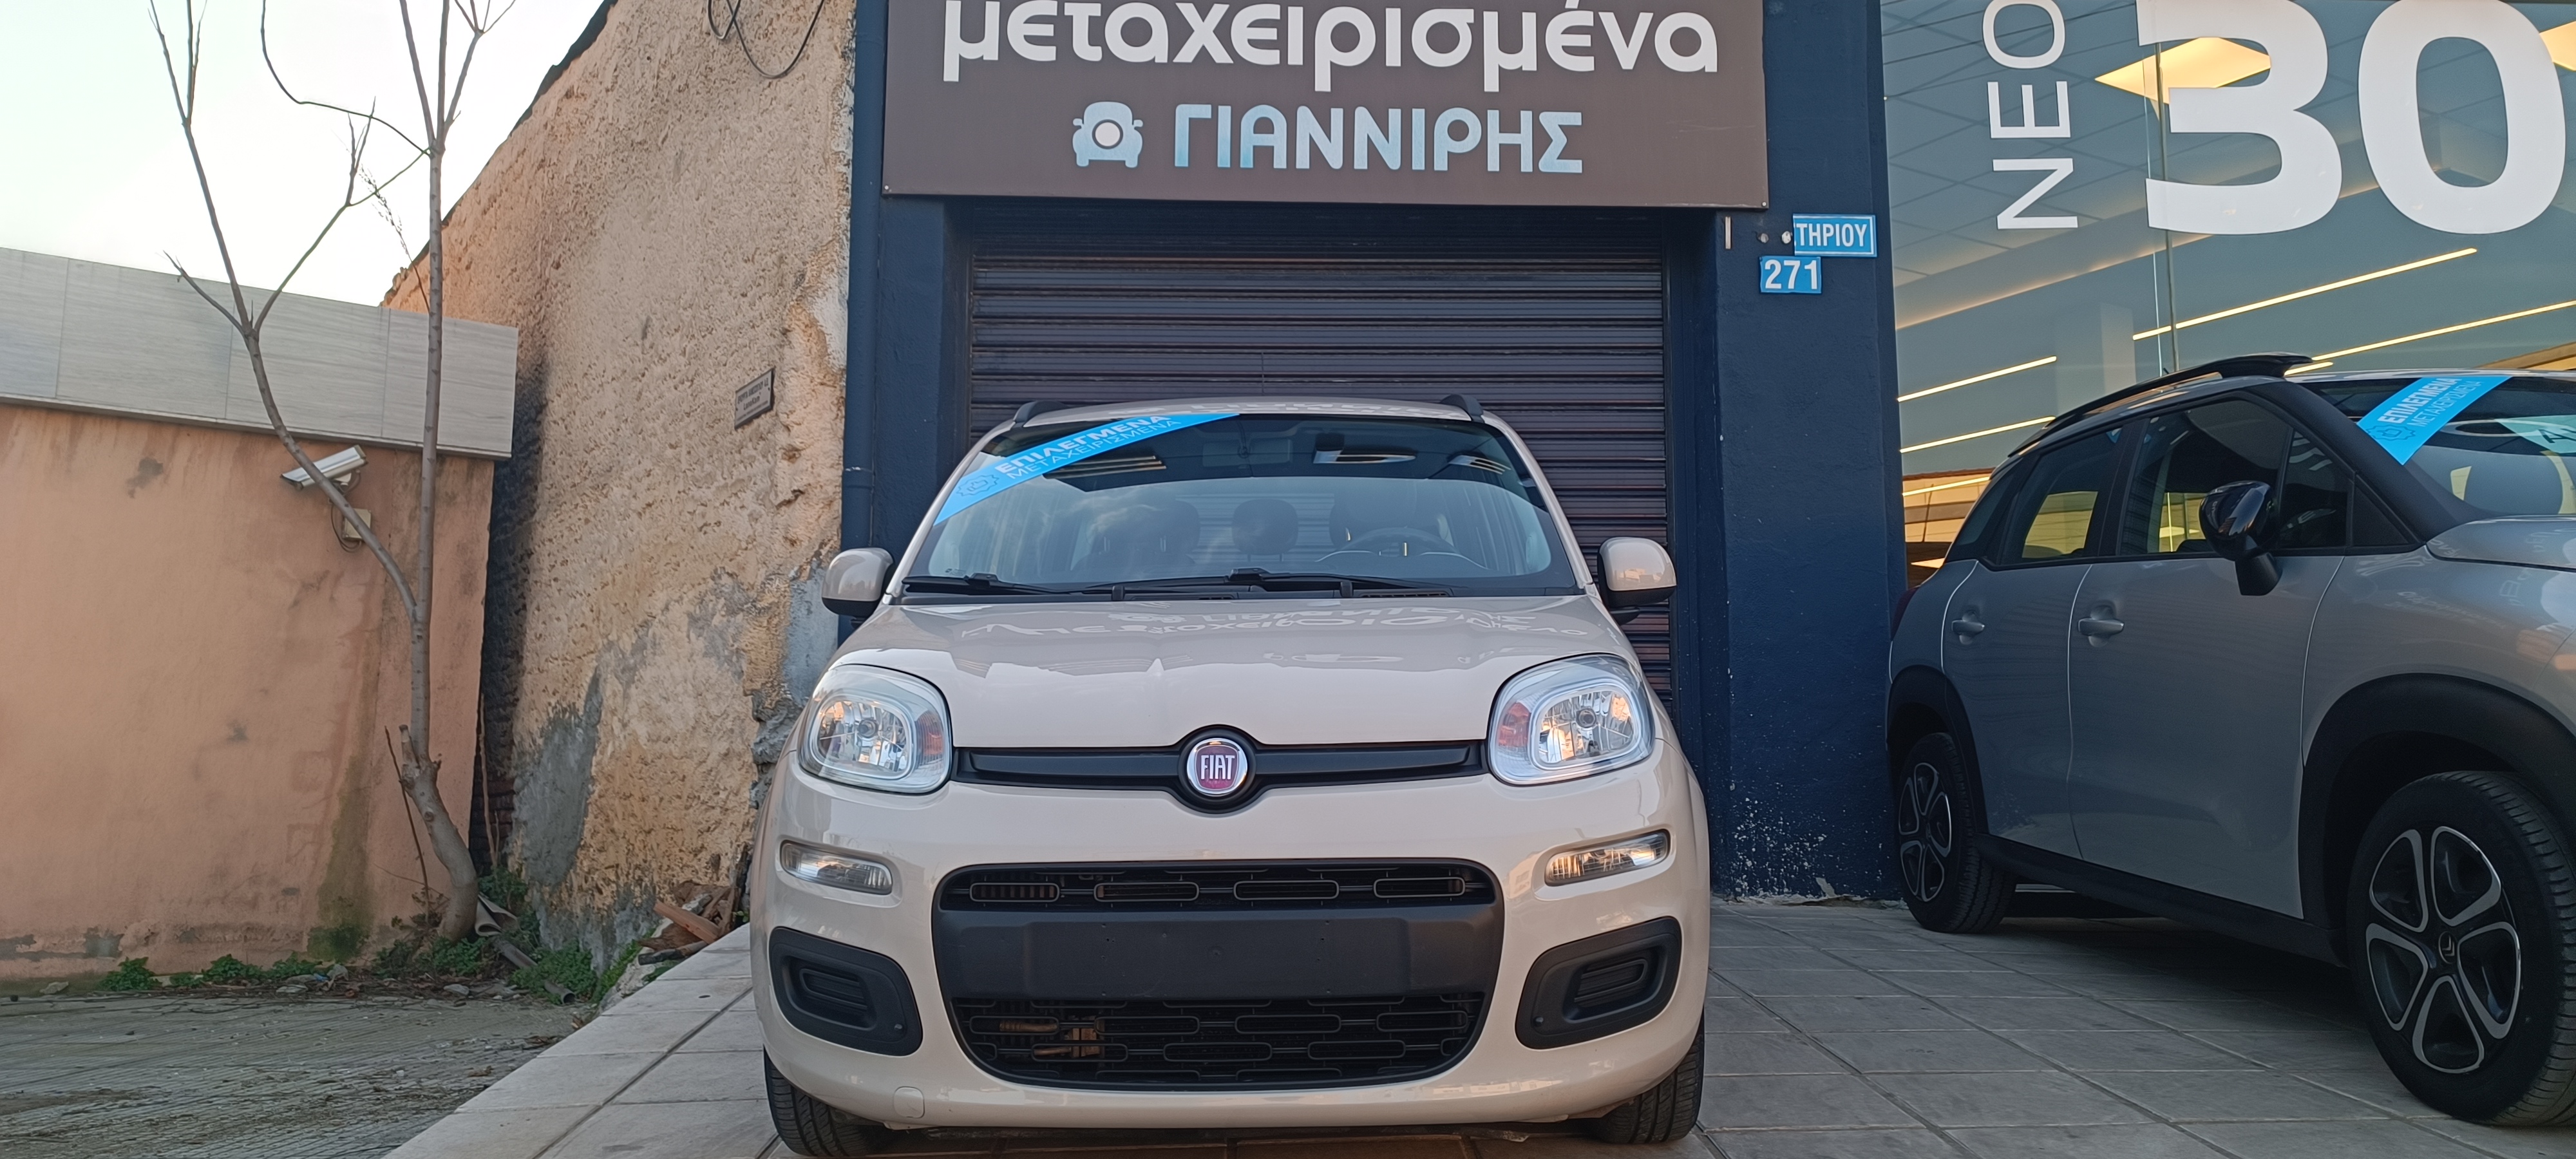 Fiat Panda 1.3 JTD Multijet **ΑΡΙΣΤΟ**